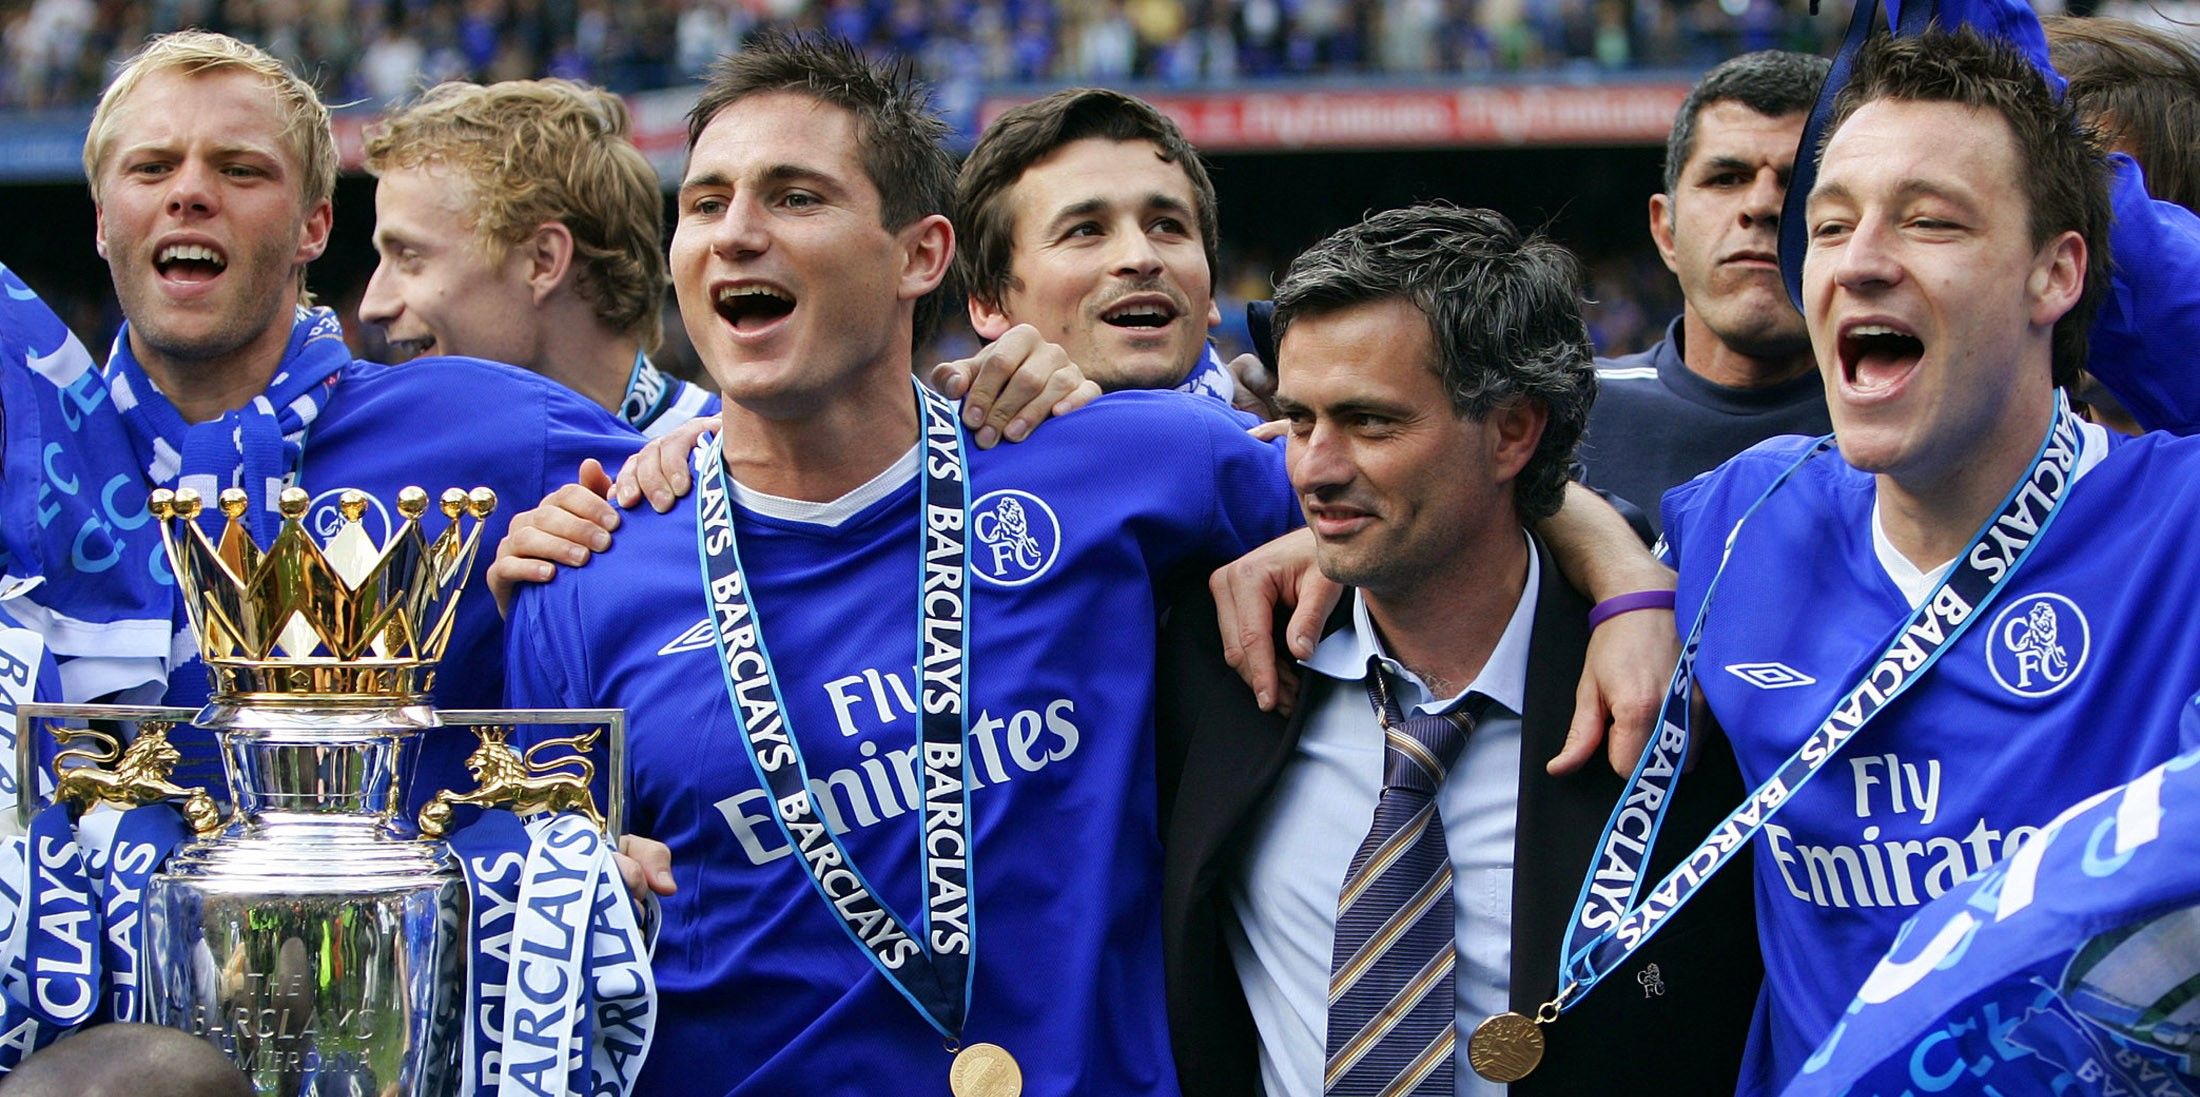 Frank Lampard alongside Jose Mourinho and John Terry after winning the Premier lEAGUE